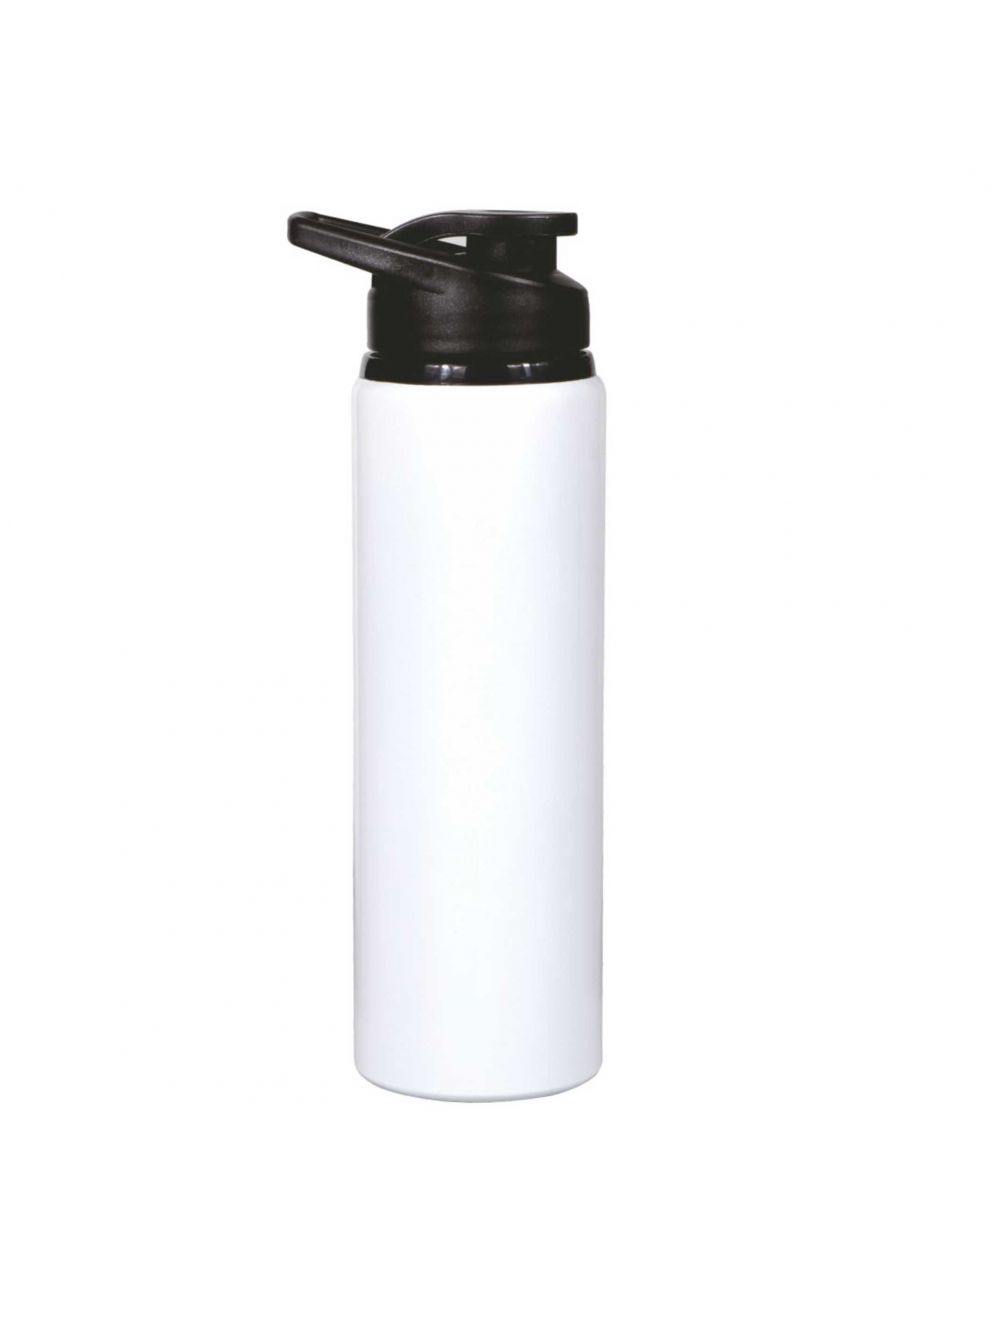 Delcasa Aluminium Lily Water Bottle 600 ml -DC1162 (Assorted Colour)